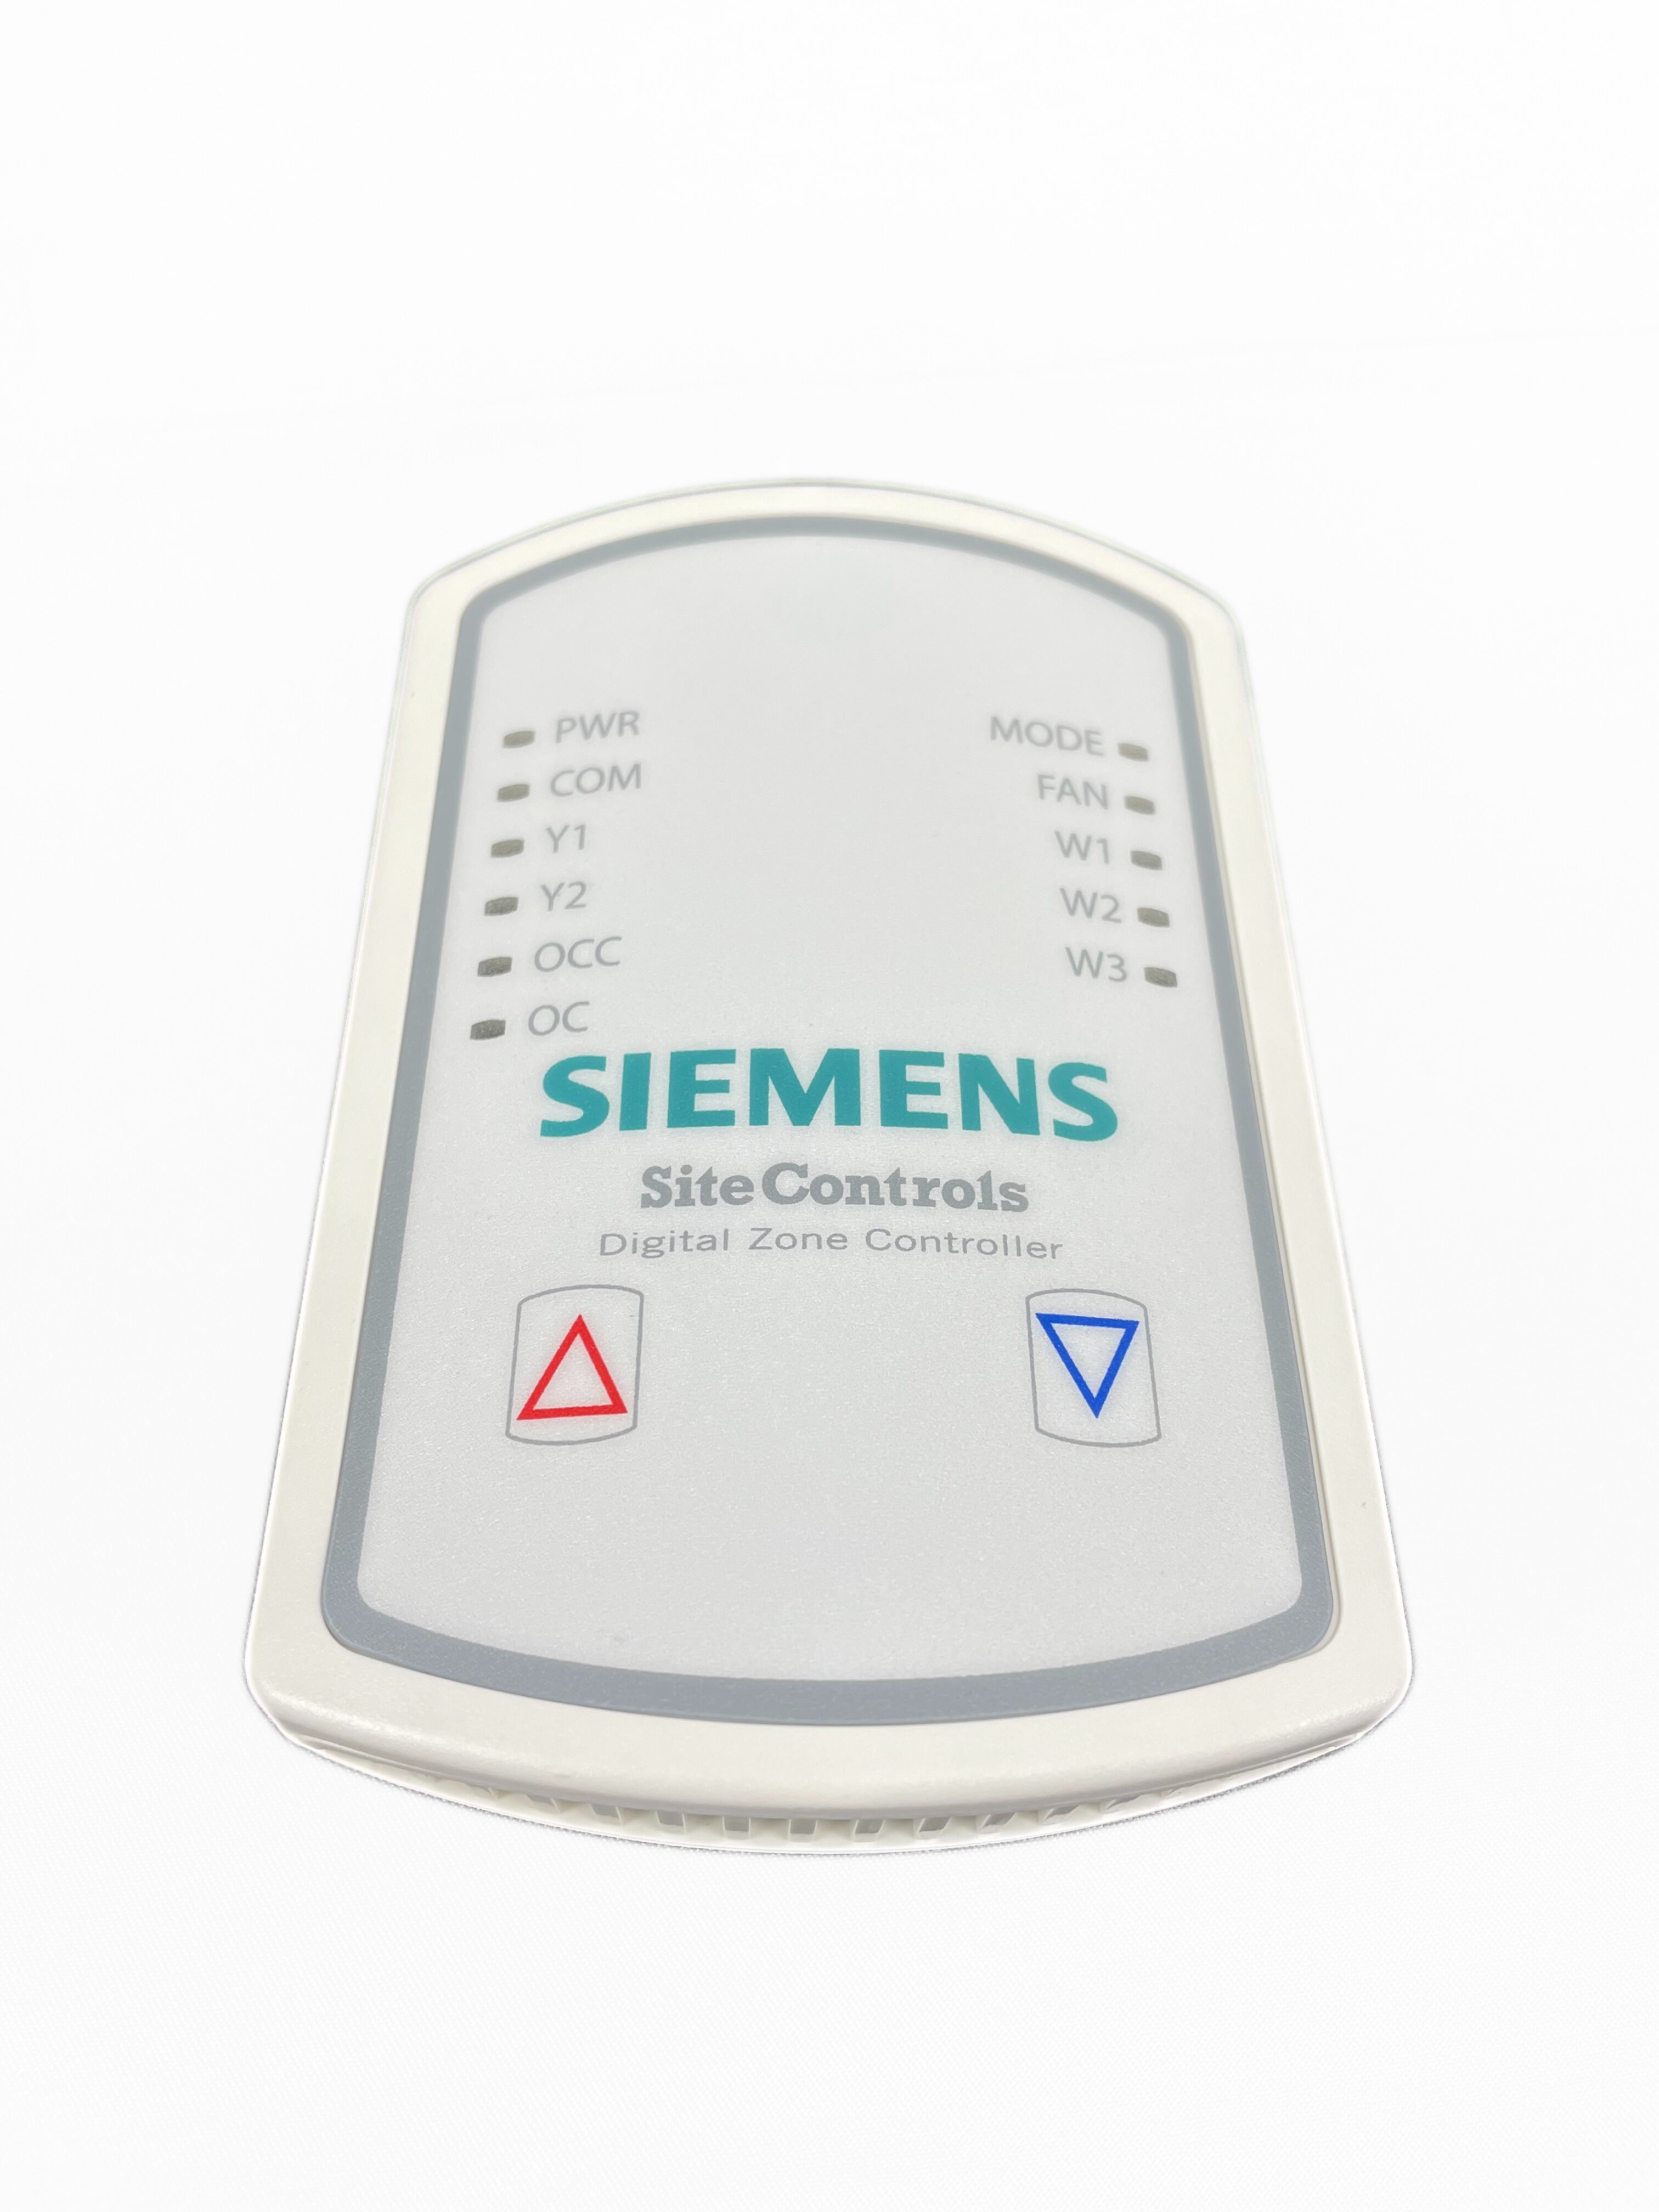 Siemens Digital Zone Controller SC1007